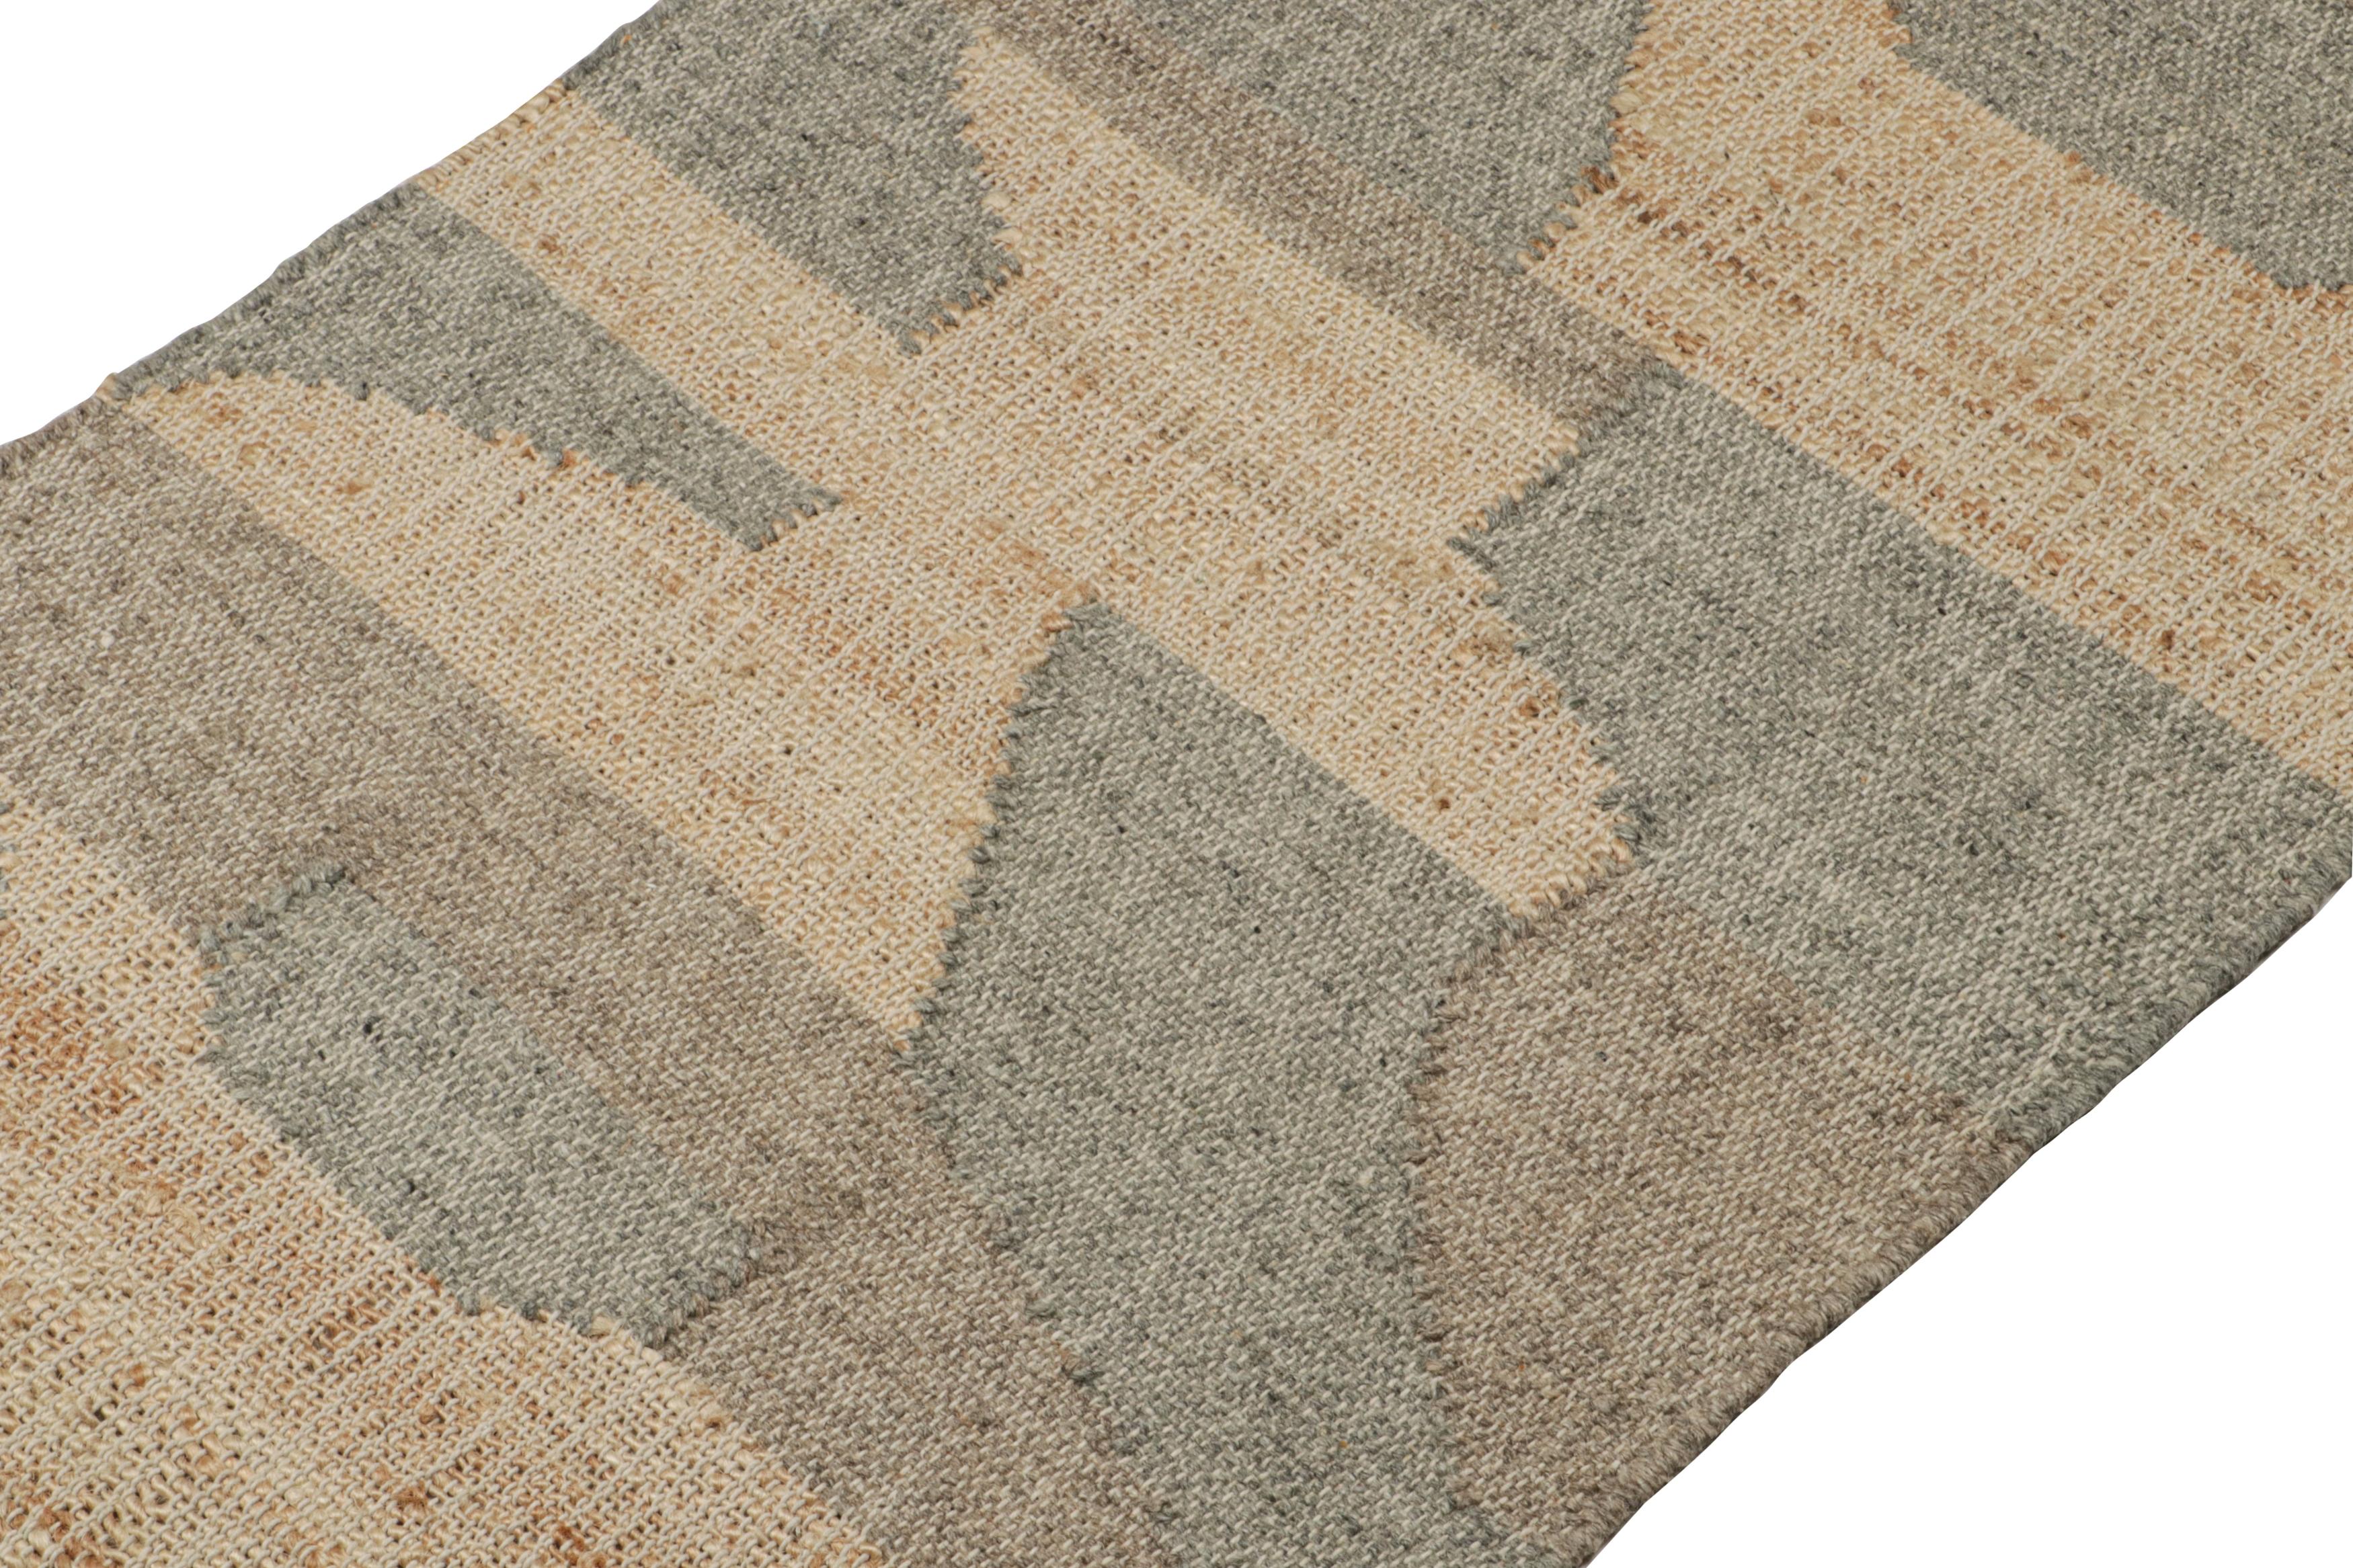 Hand-Woven Rug & Kilim’s Modern Kilim rug in Beige-Brown & Grey Patterns For Sale